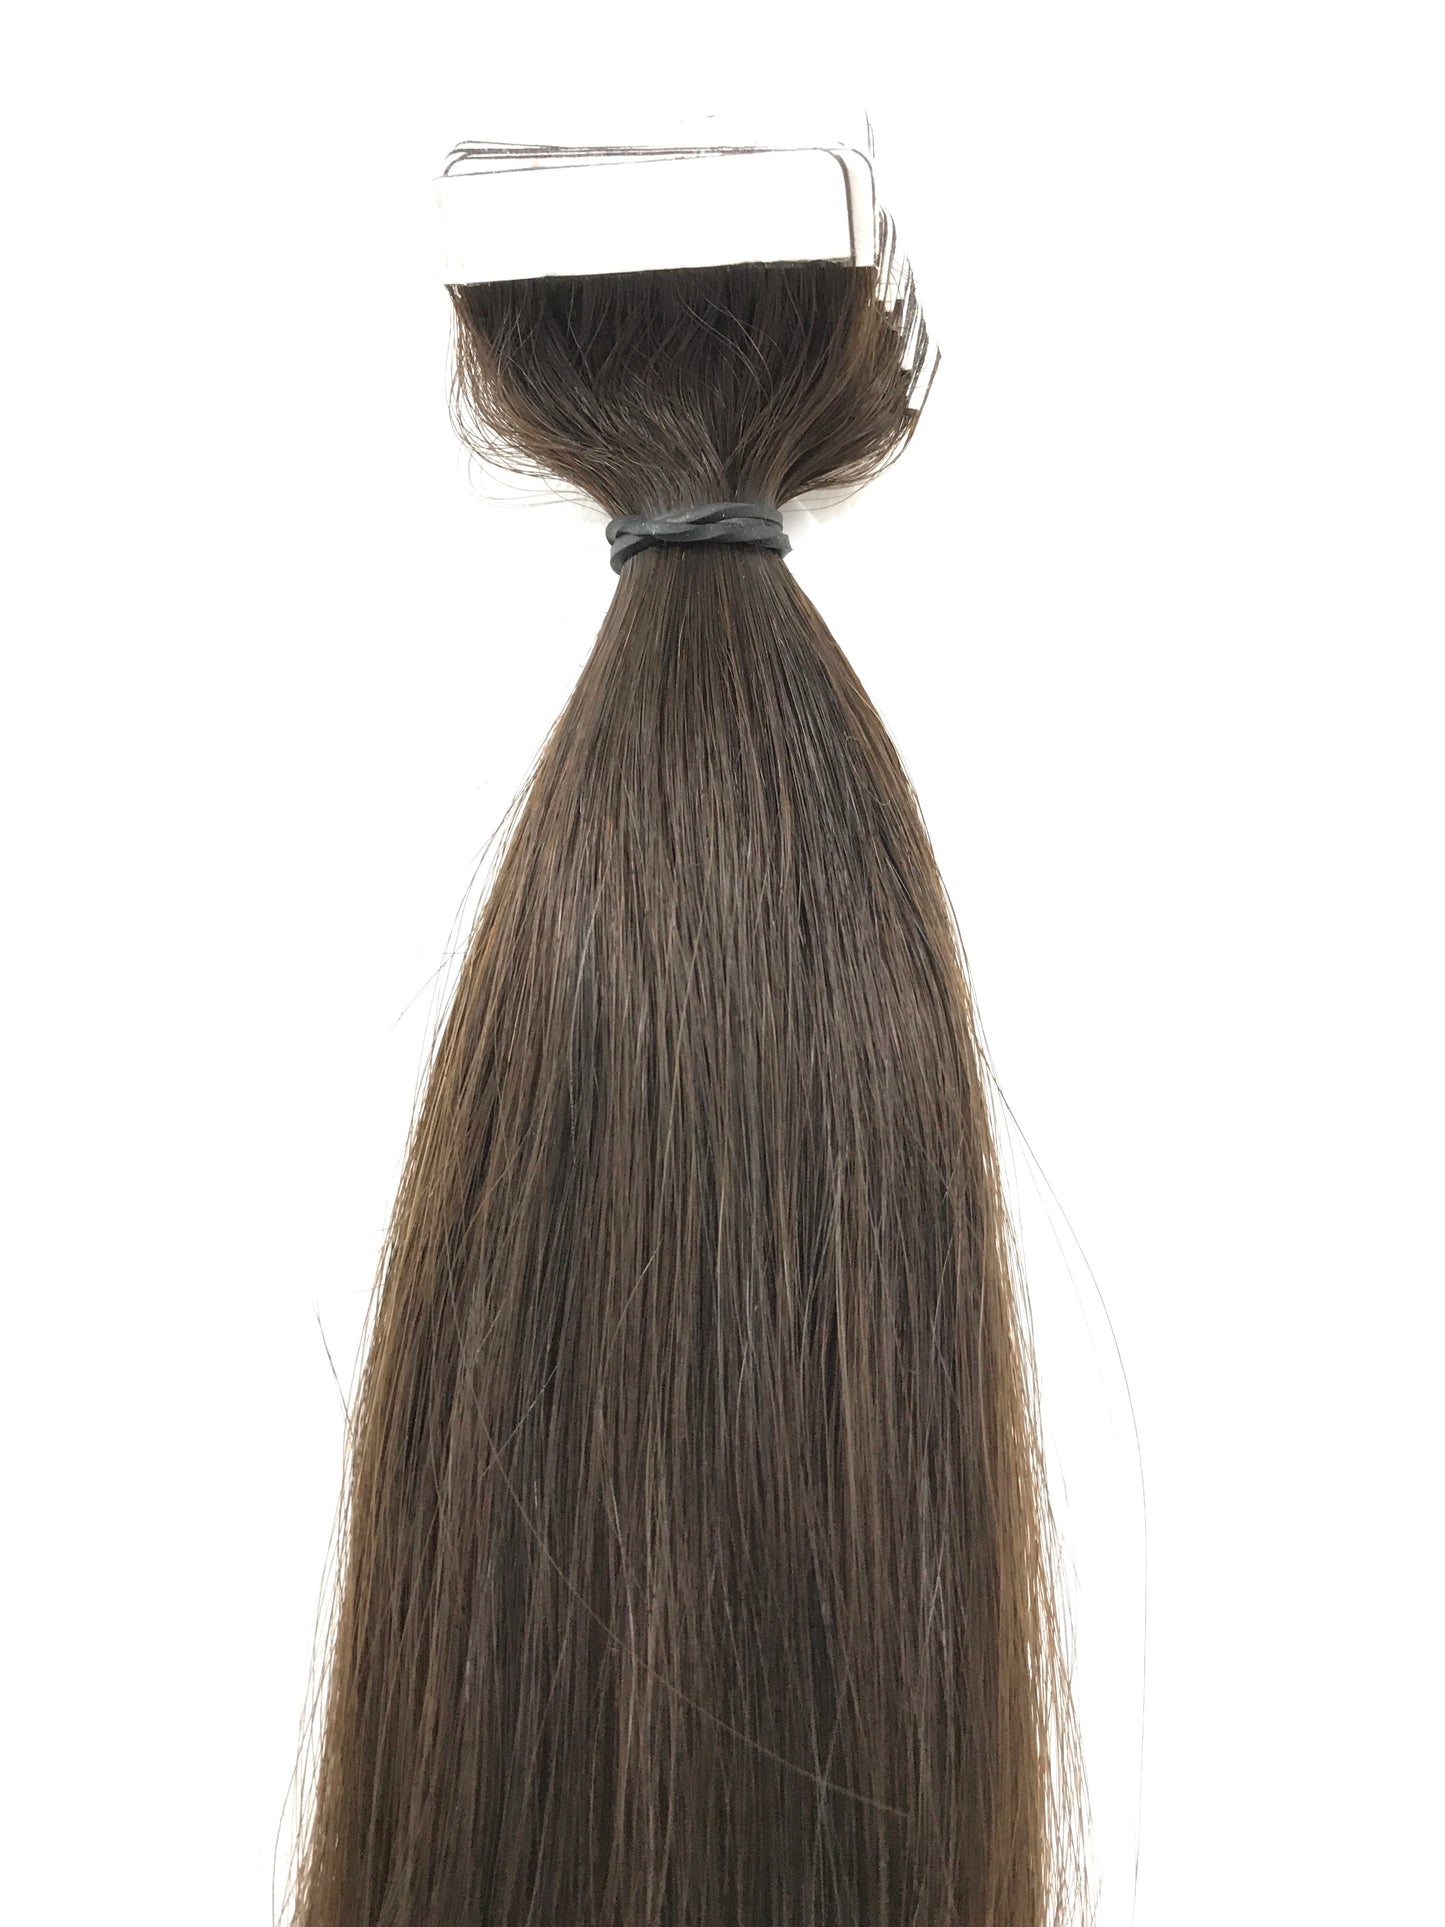 Brazilian Virgin Remy Human Hair, Tape Extensions, Straight, 24'', Dark Brown. Quick Shipping!-Virgin Hair & Beauty, The Best Hair Extensions, Real Virgin Human Hair.